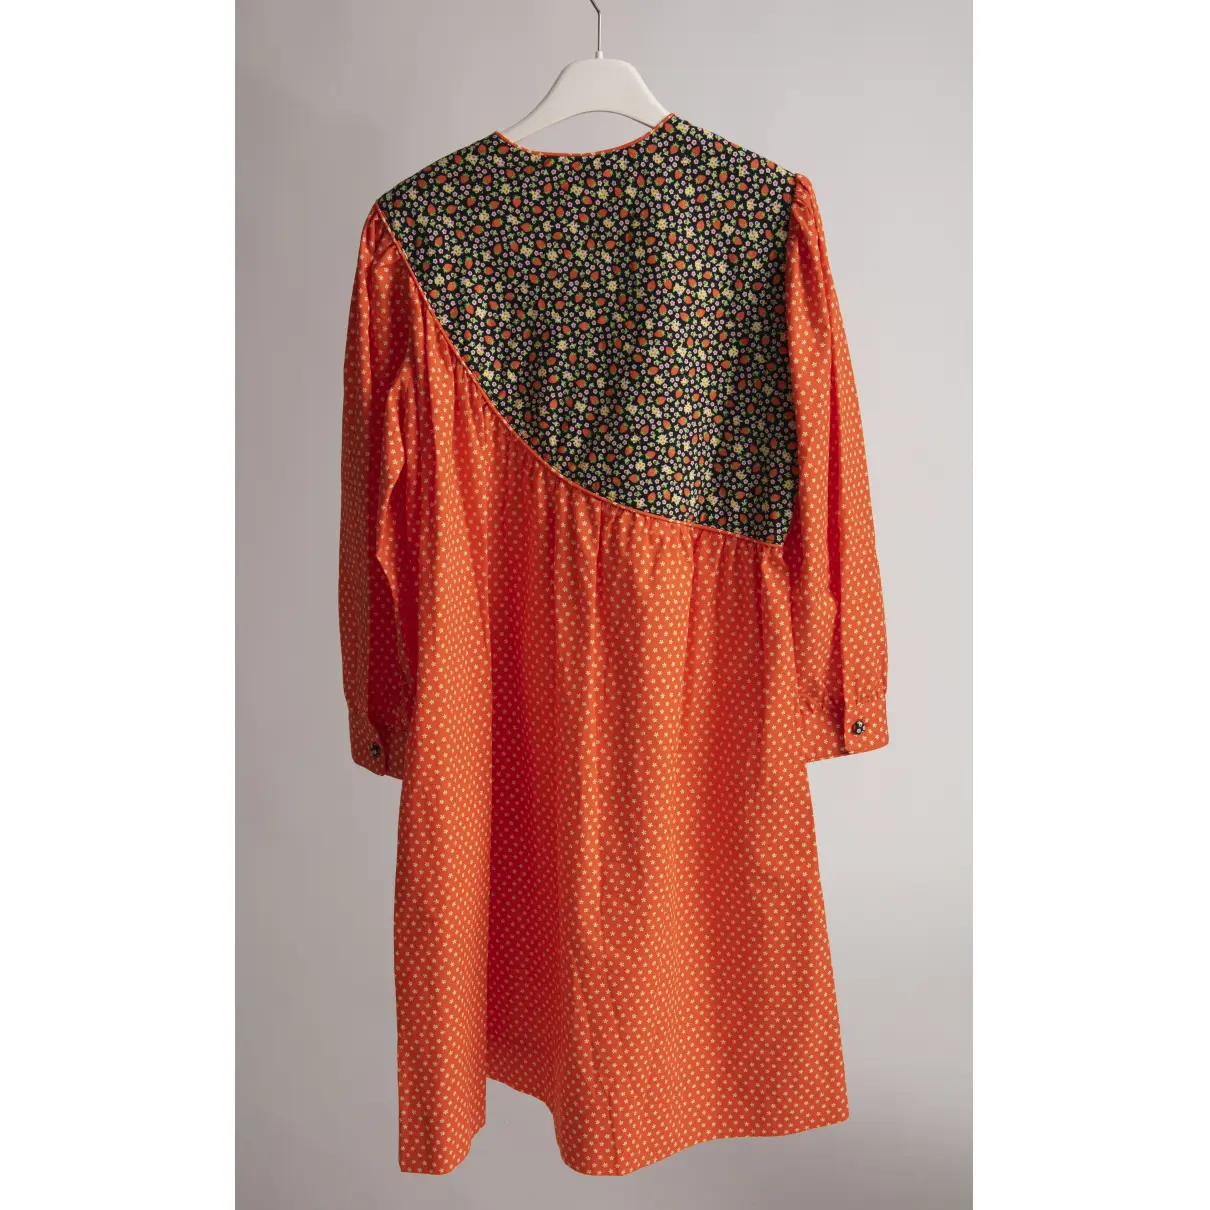 Buy Batsheva Mid-length dress online